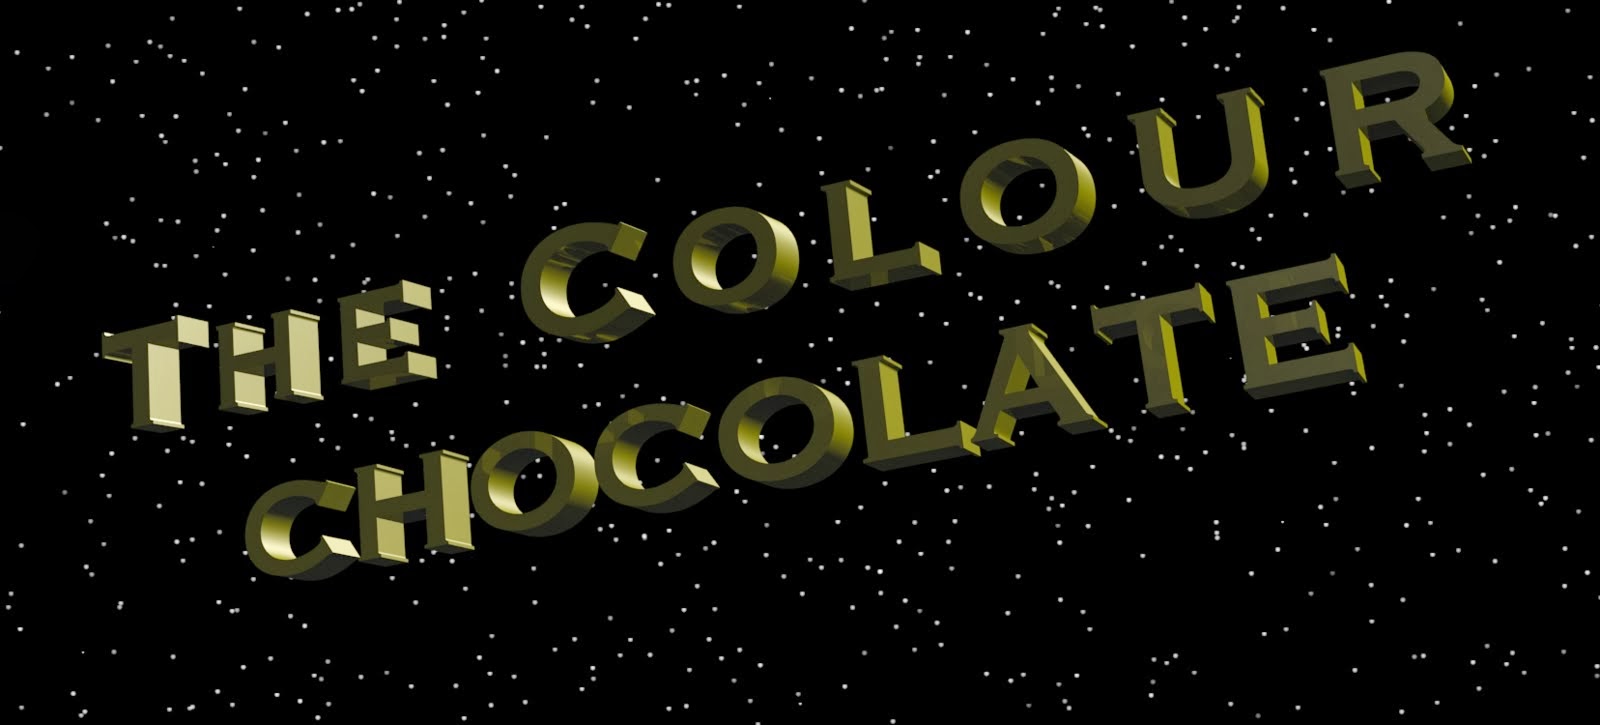 The Colour Chocolate